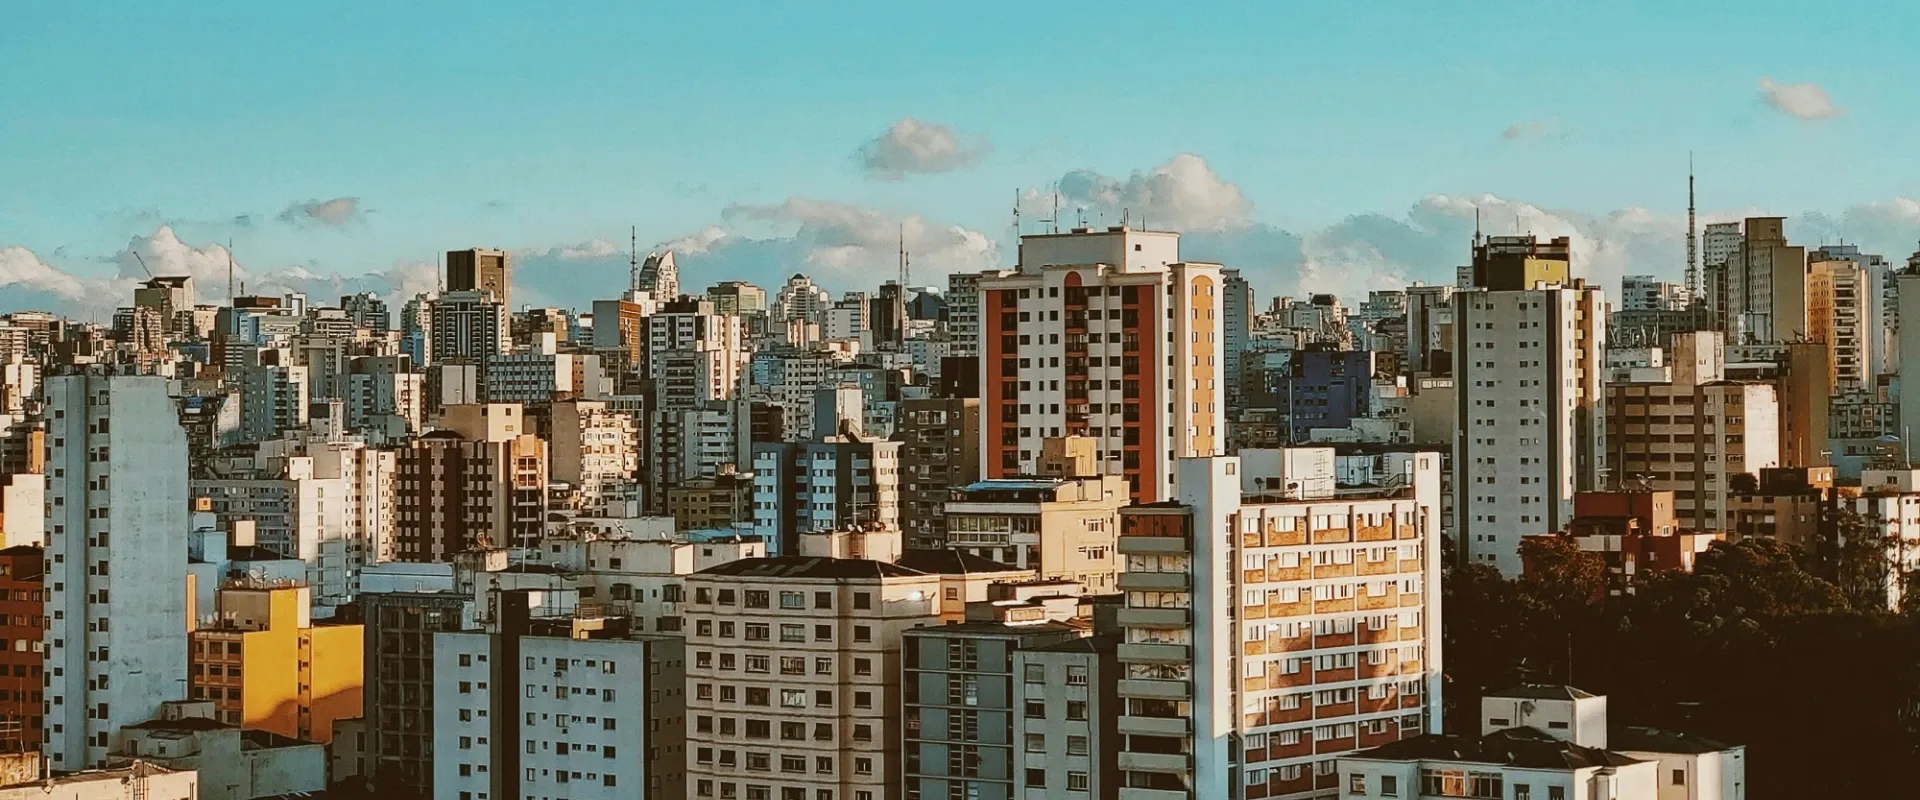 The São Paulo skyline